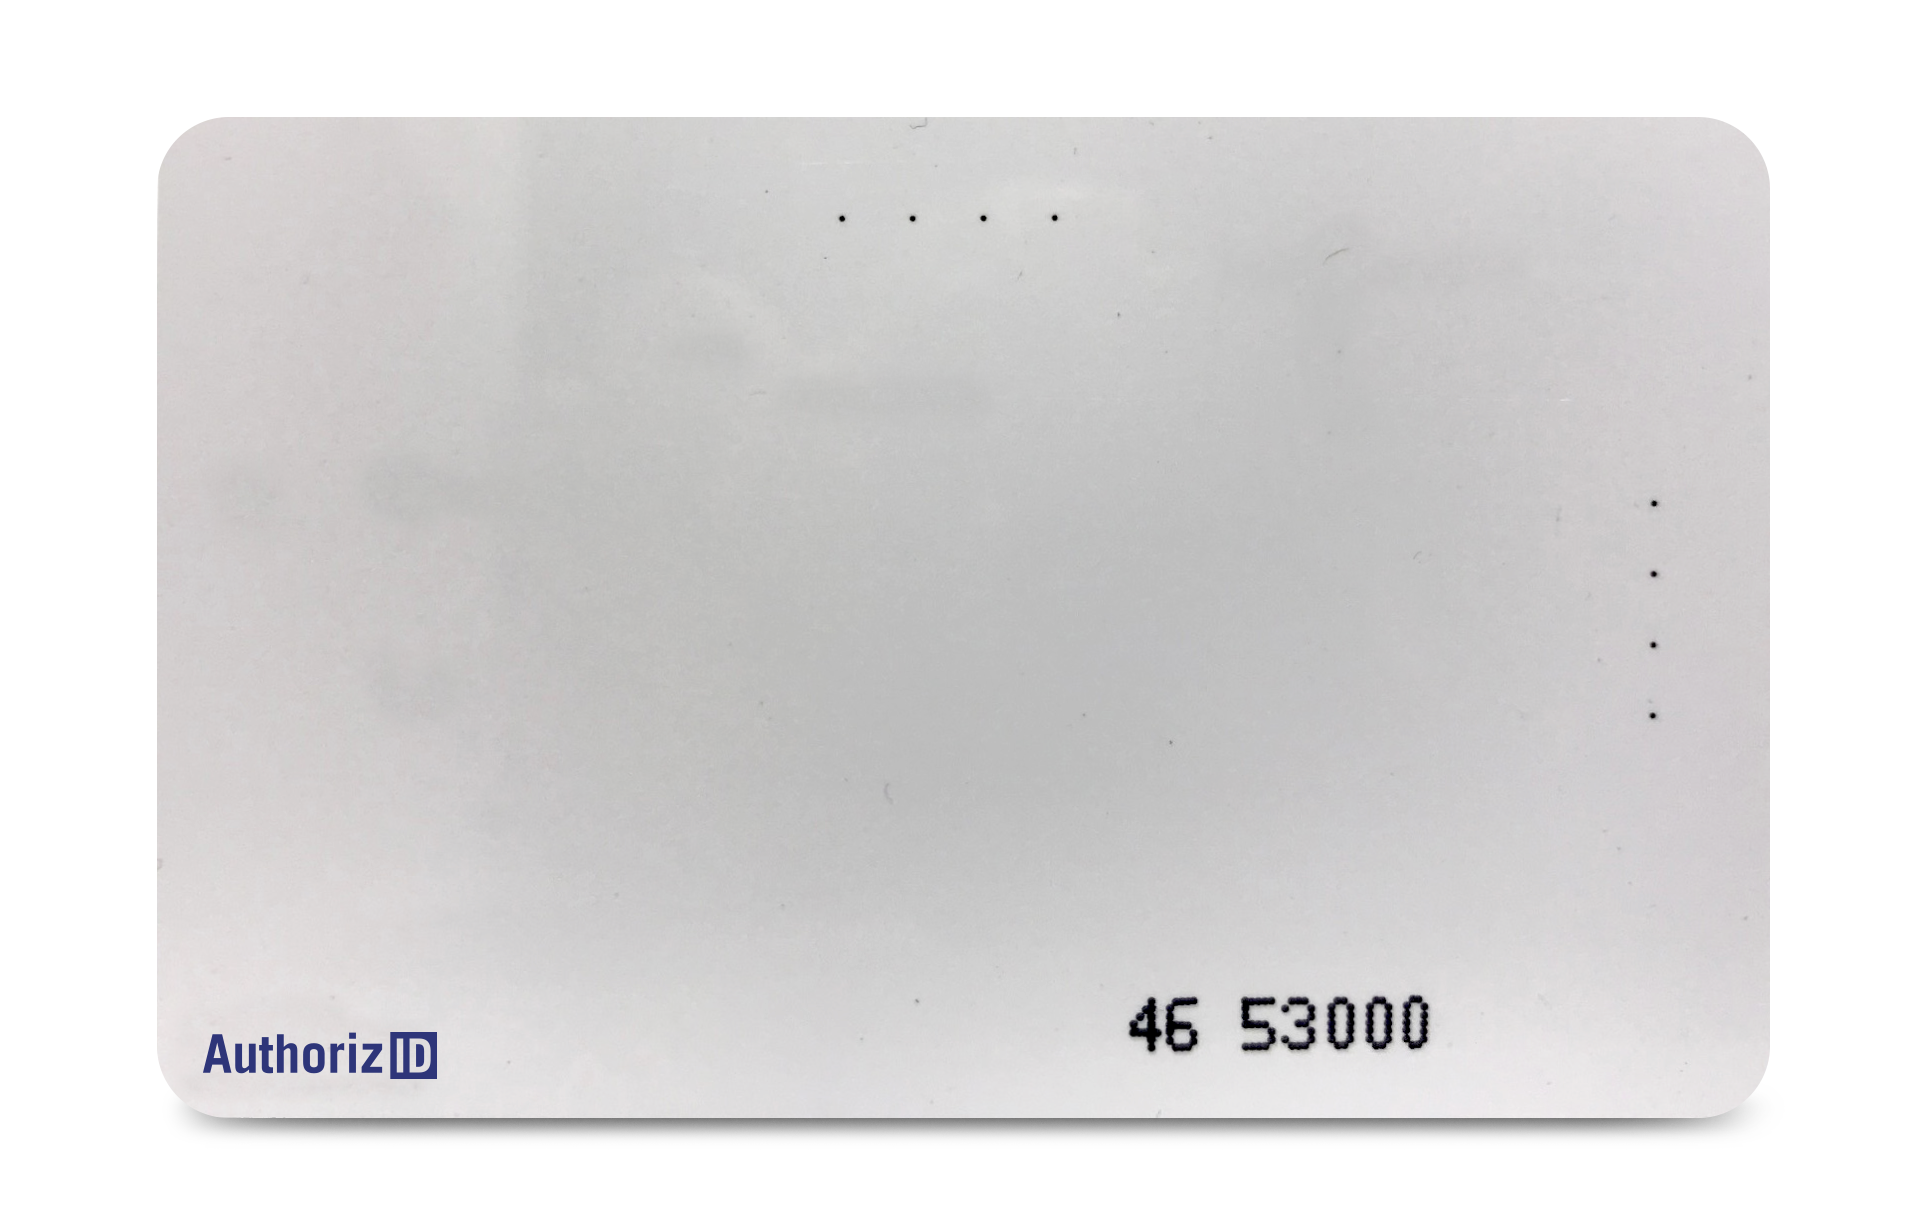 CR-80 карта. RFID стикер Wiegand 26 bit. ID-1 (CR-80) карта. Fp0500a 26bit электроника Cem-603 проксимити считывателя,w26bit. Proxy 80